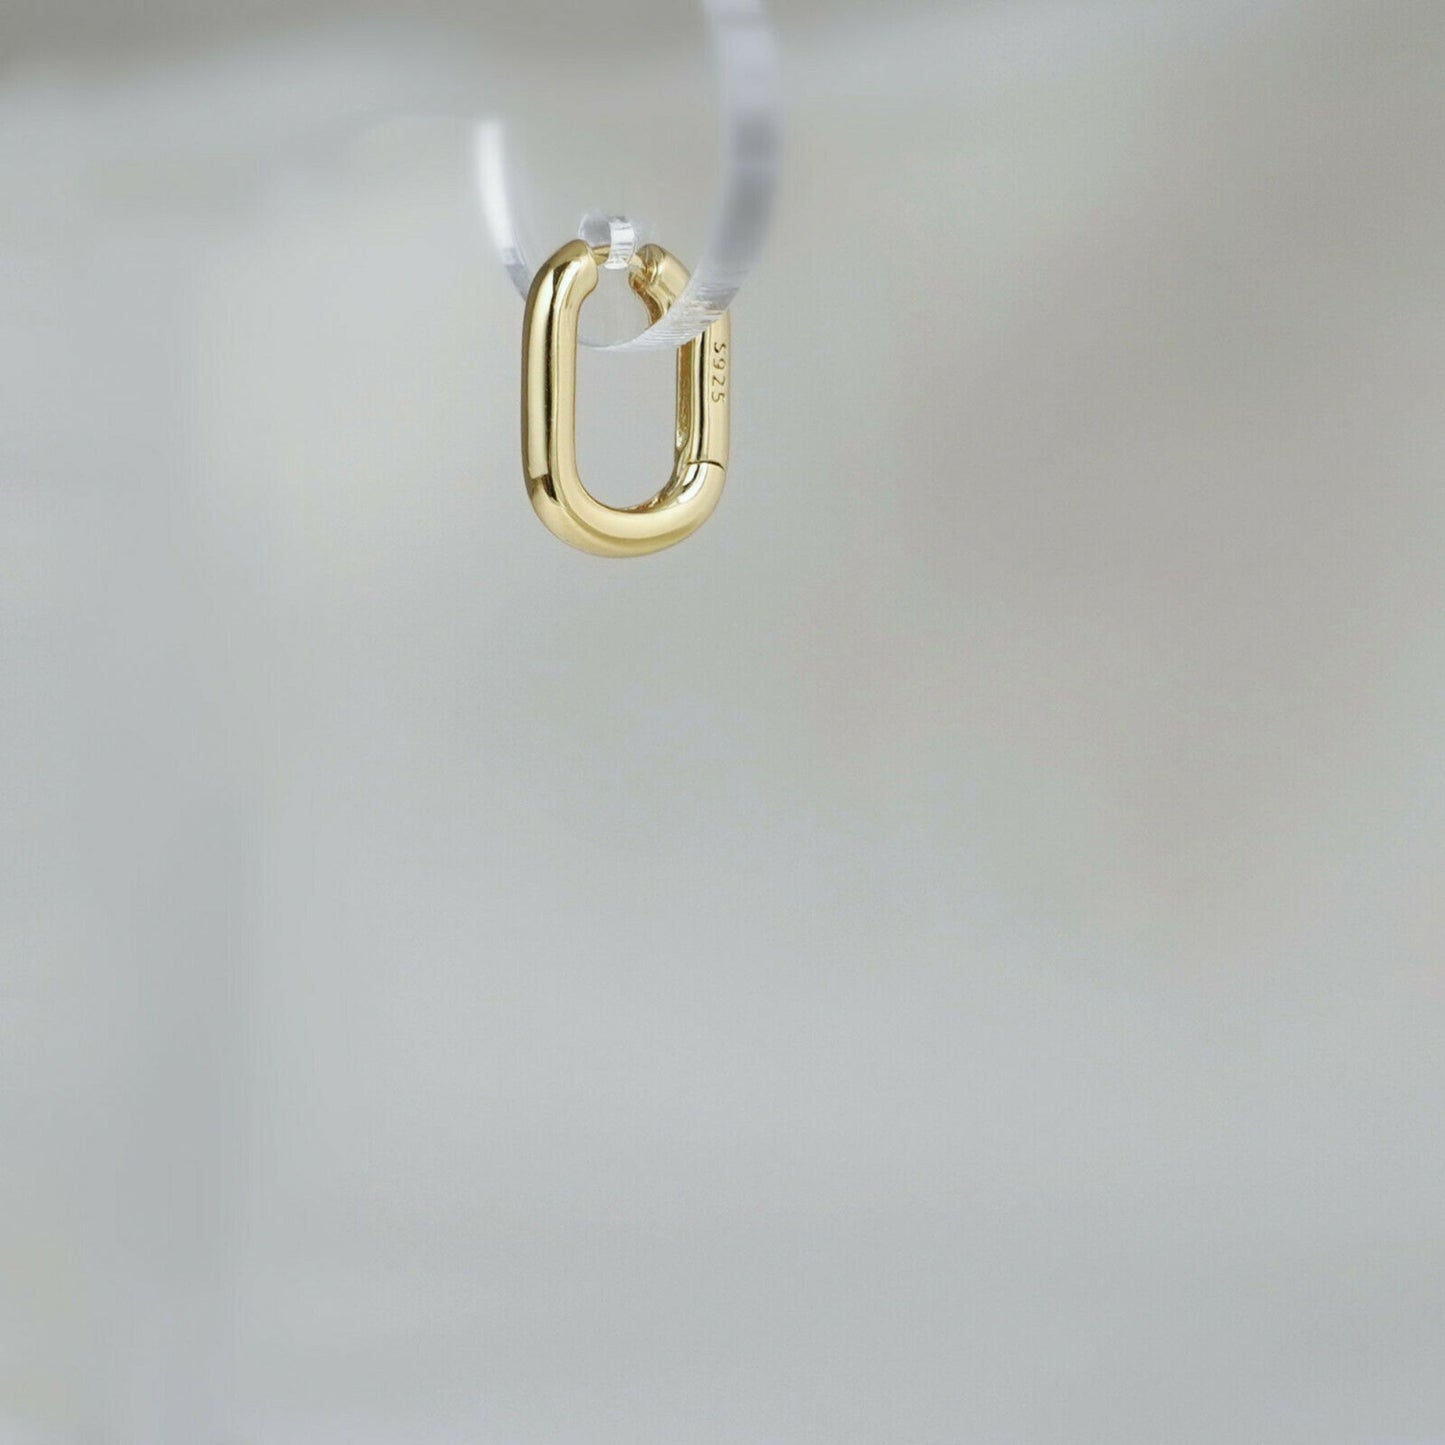 18K Gold Square Hoop Earrings with Sterling Silver Huggie Back (14mm)